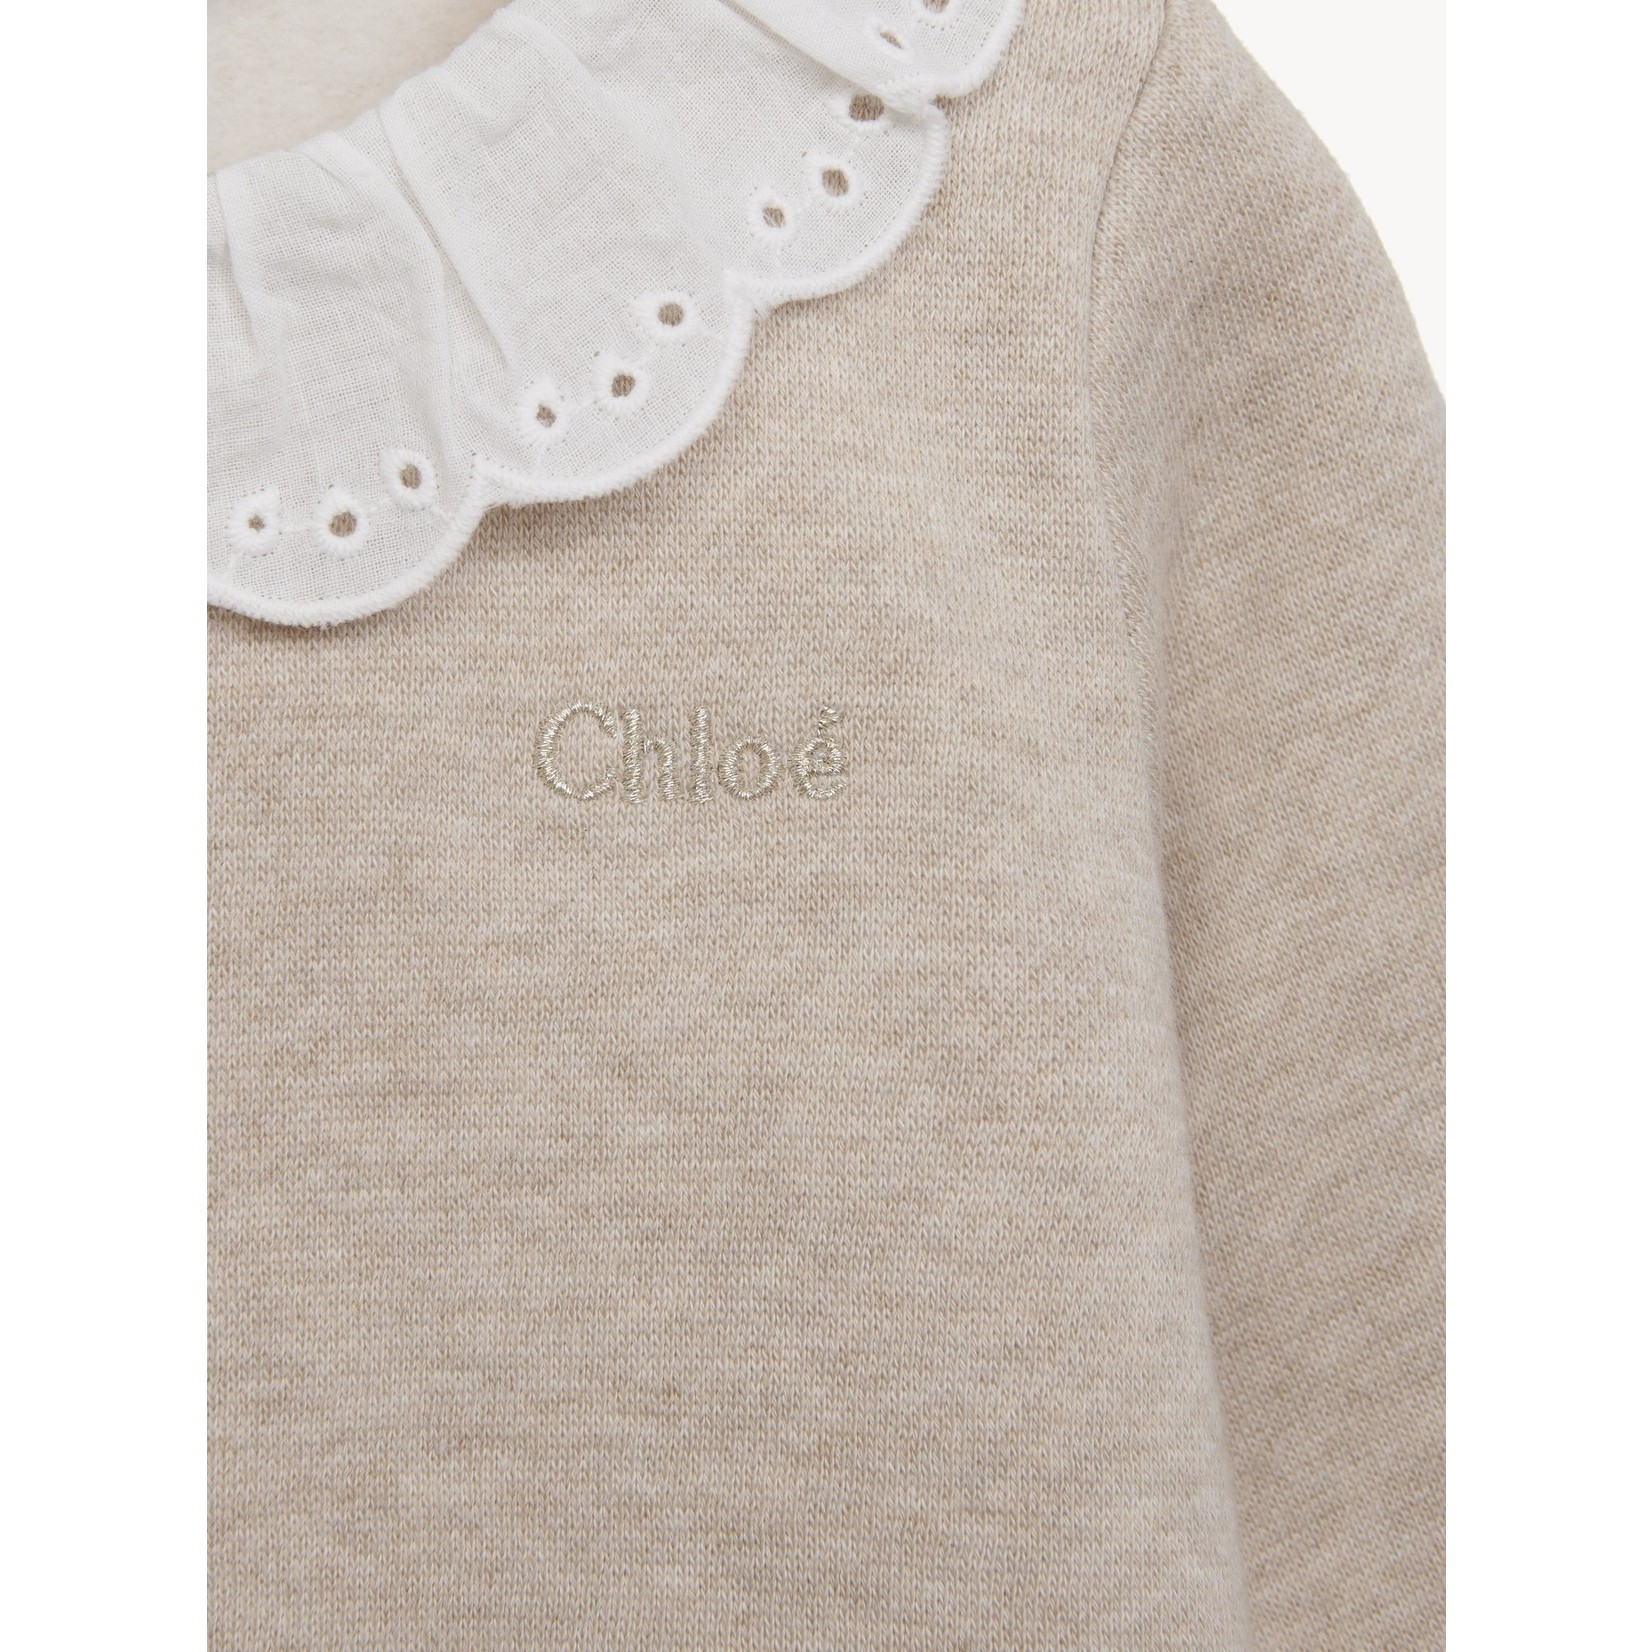 Chloe Chloe - collared sweater